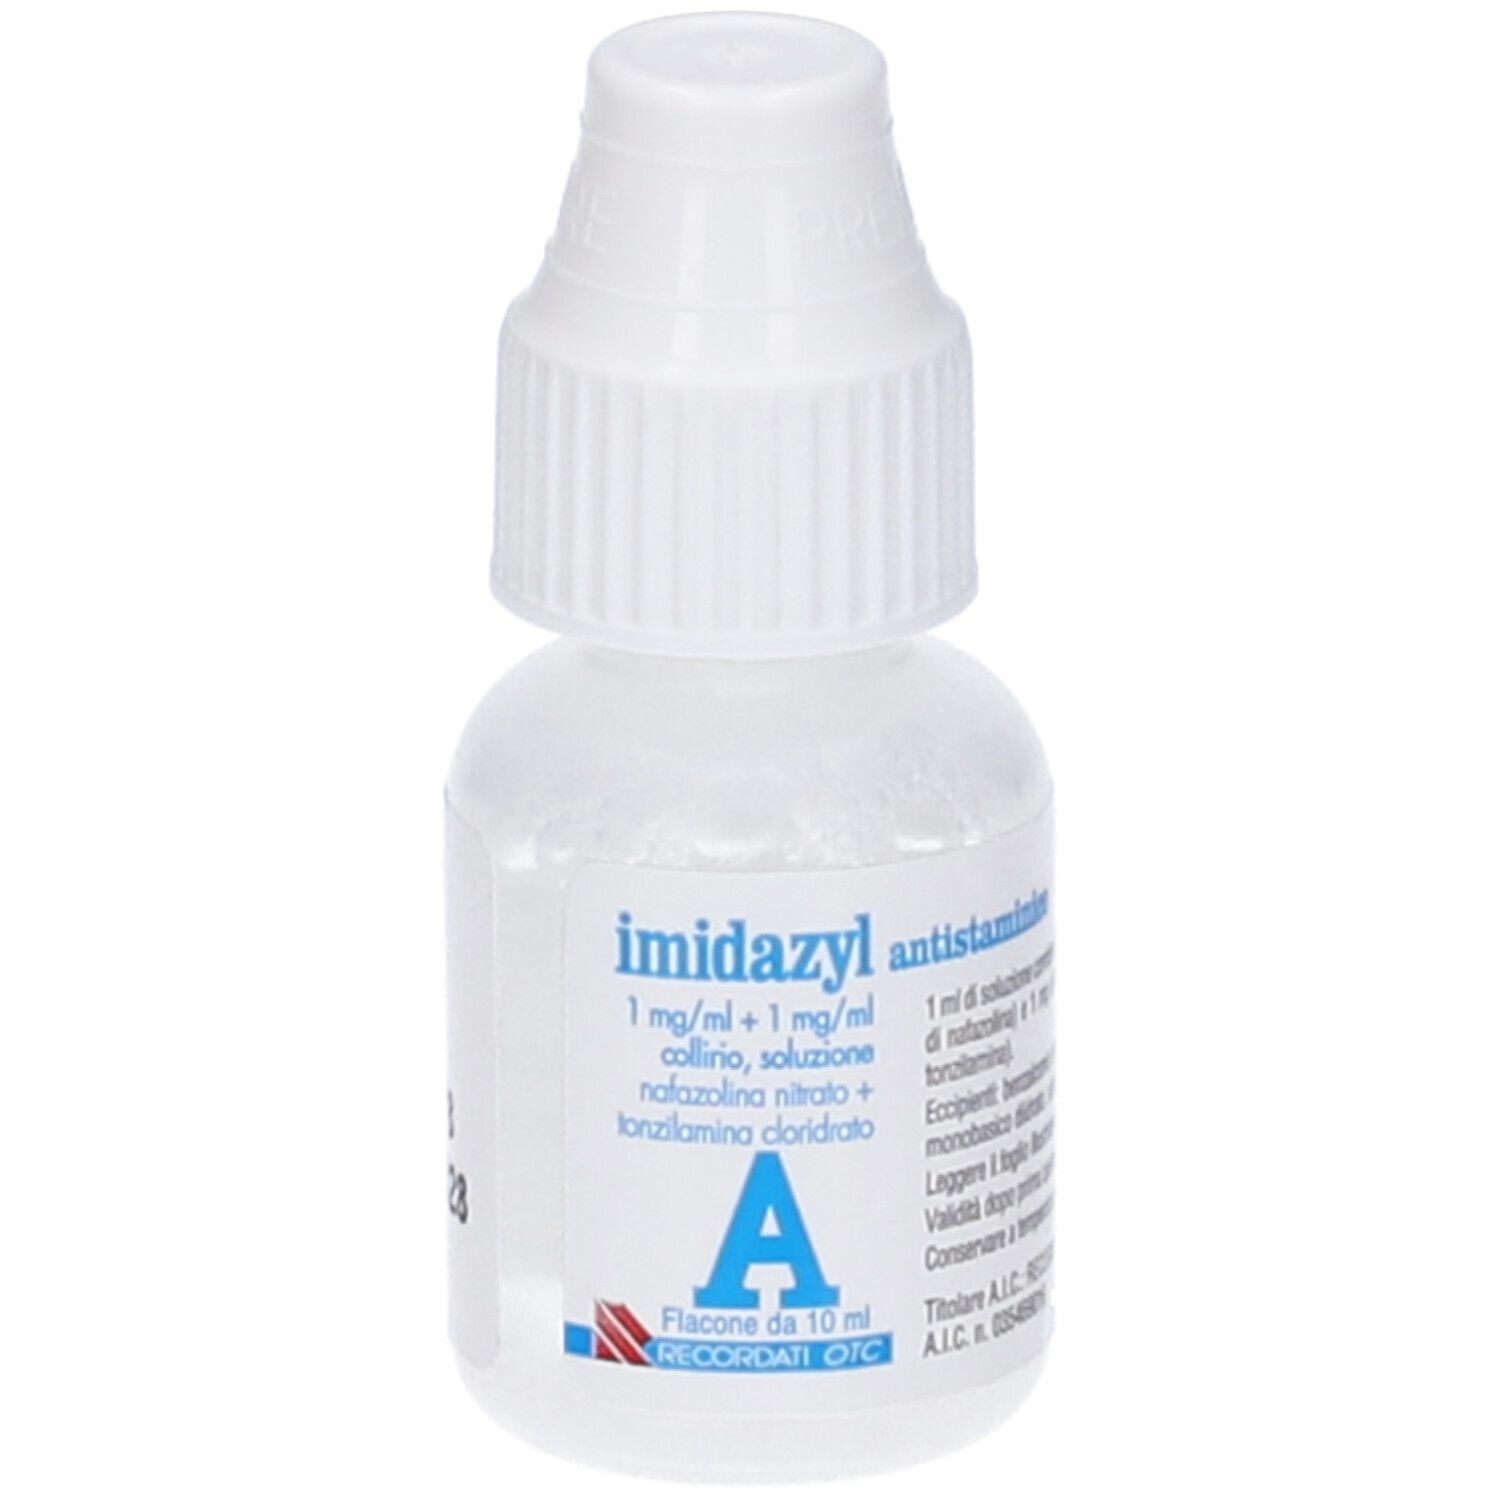 Imidazyl antistaminico 1 mg/ml Collirio Flacone